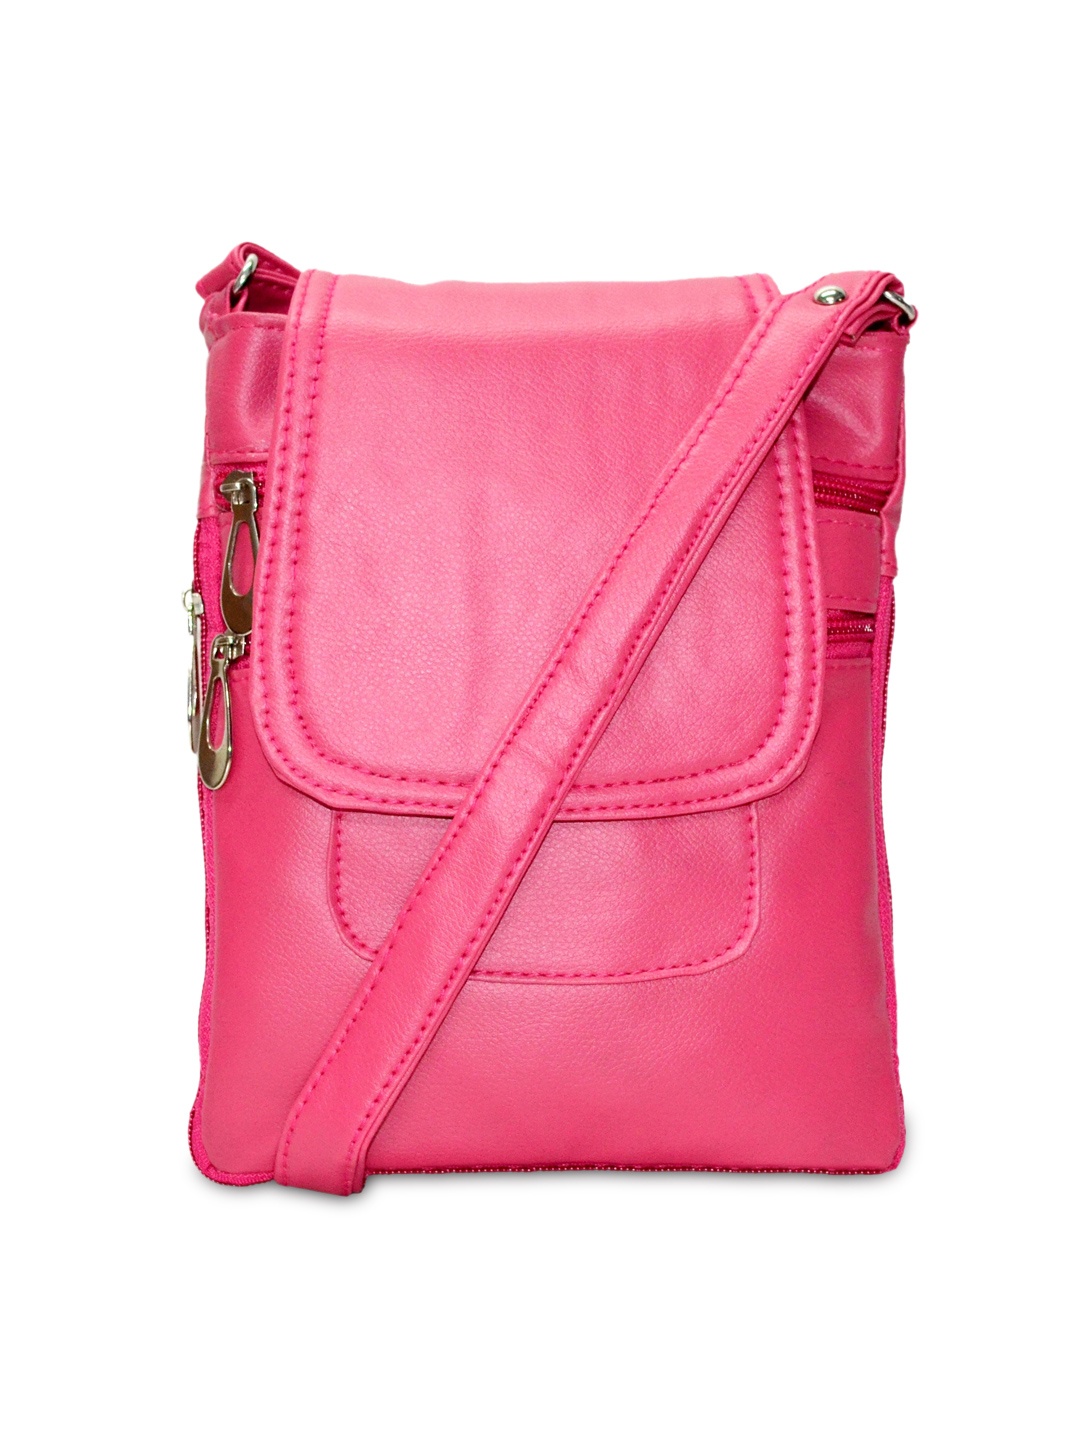 Myntra Utsukushii Pink Sling Bag 846342 | Buy Myntra Utsukushii Handbags at best price online ...